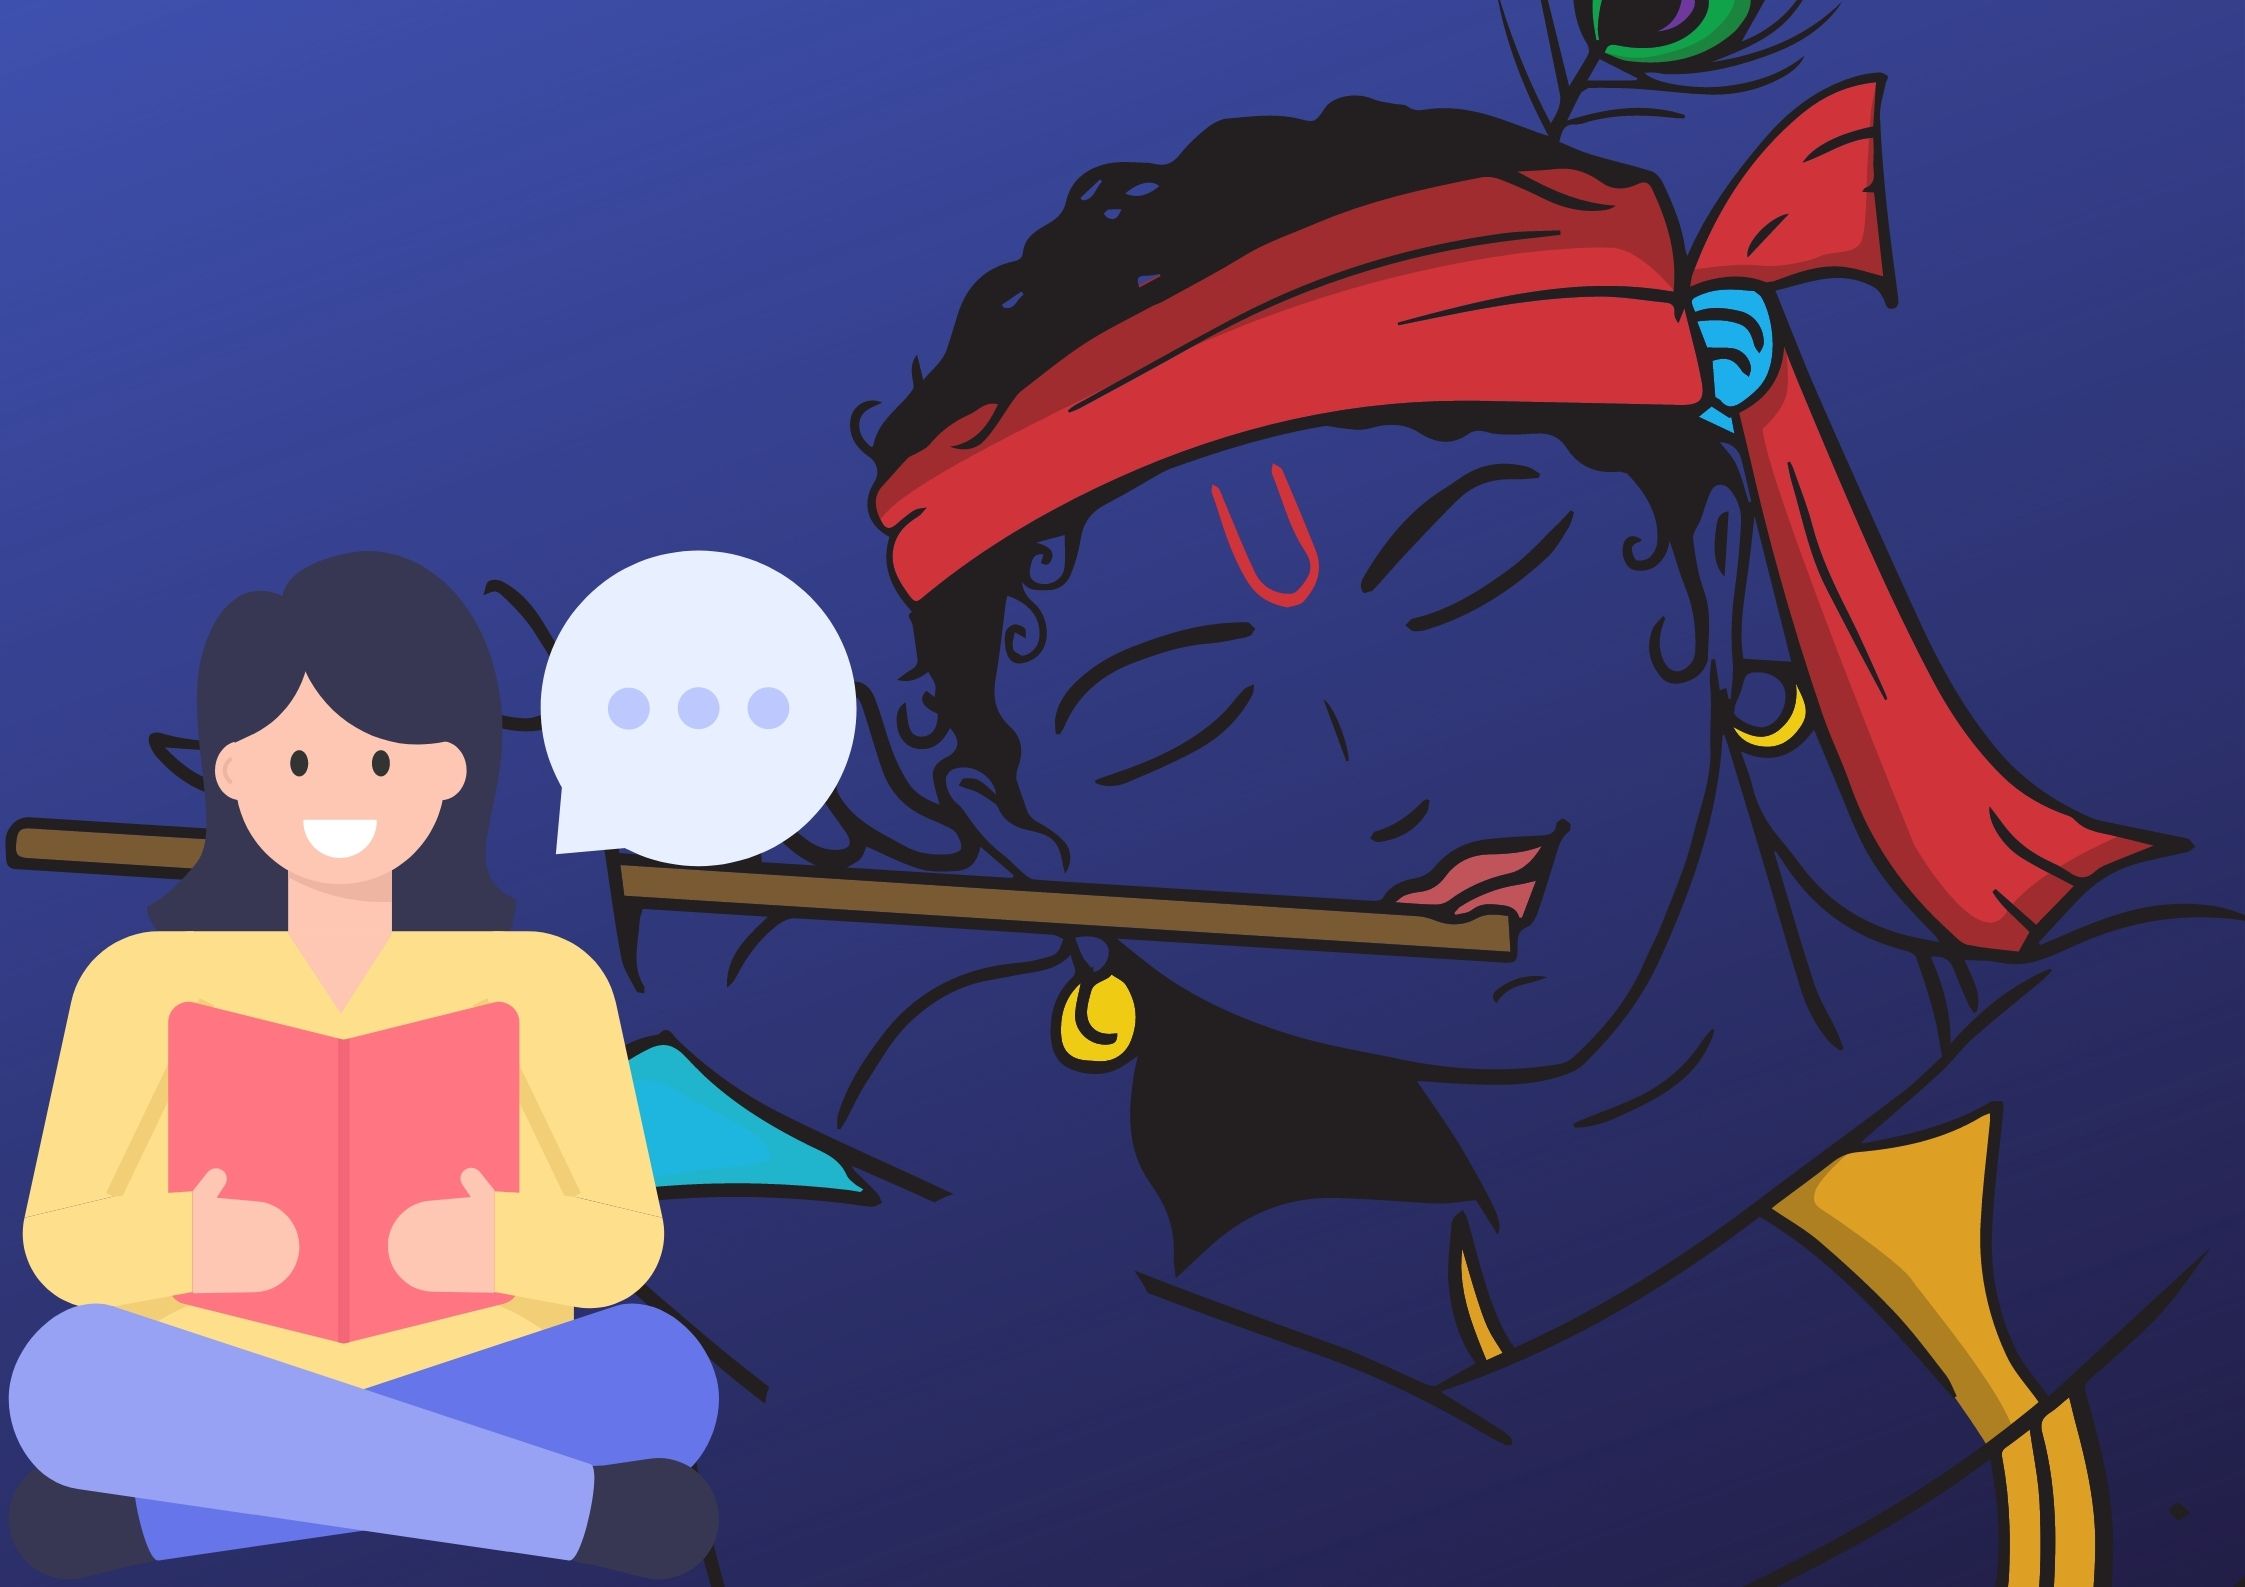 Shri Krishna's TOP 3 Life Lessons from Bhagavad Gita and Mahabharat